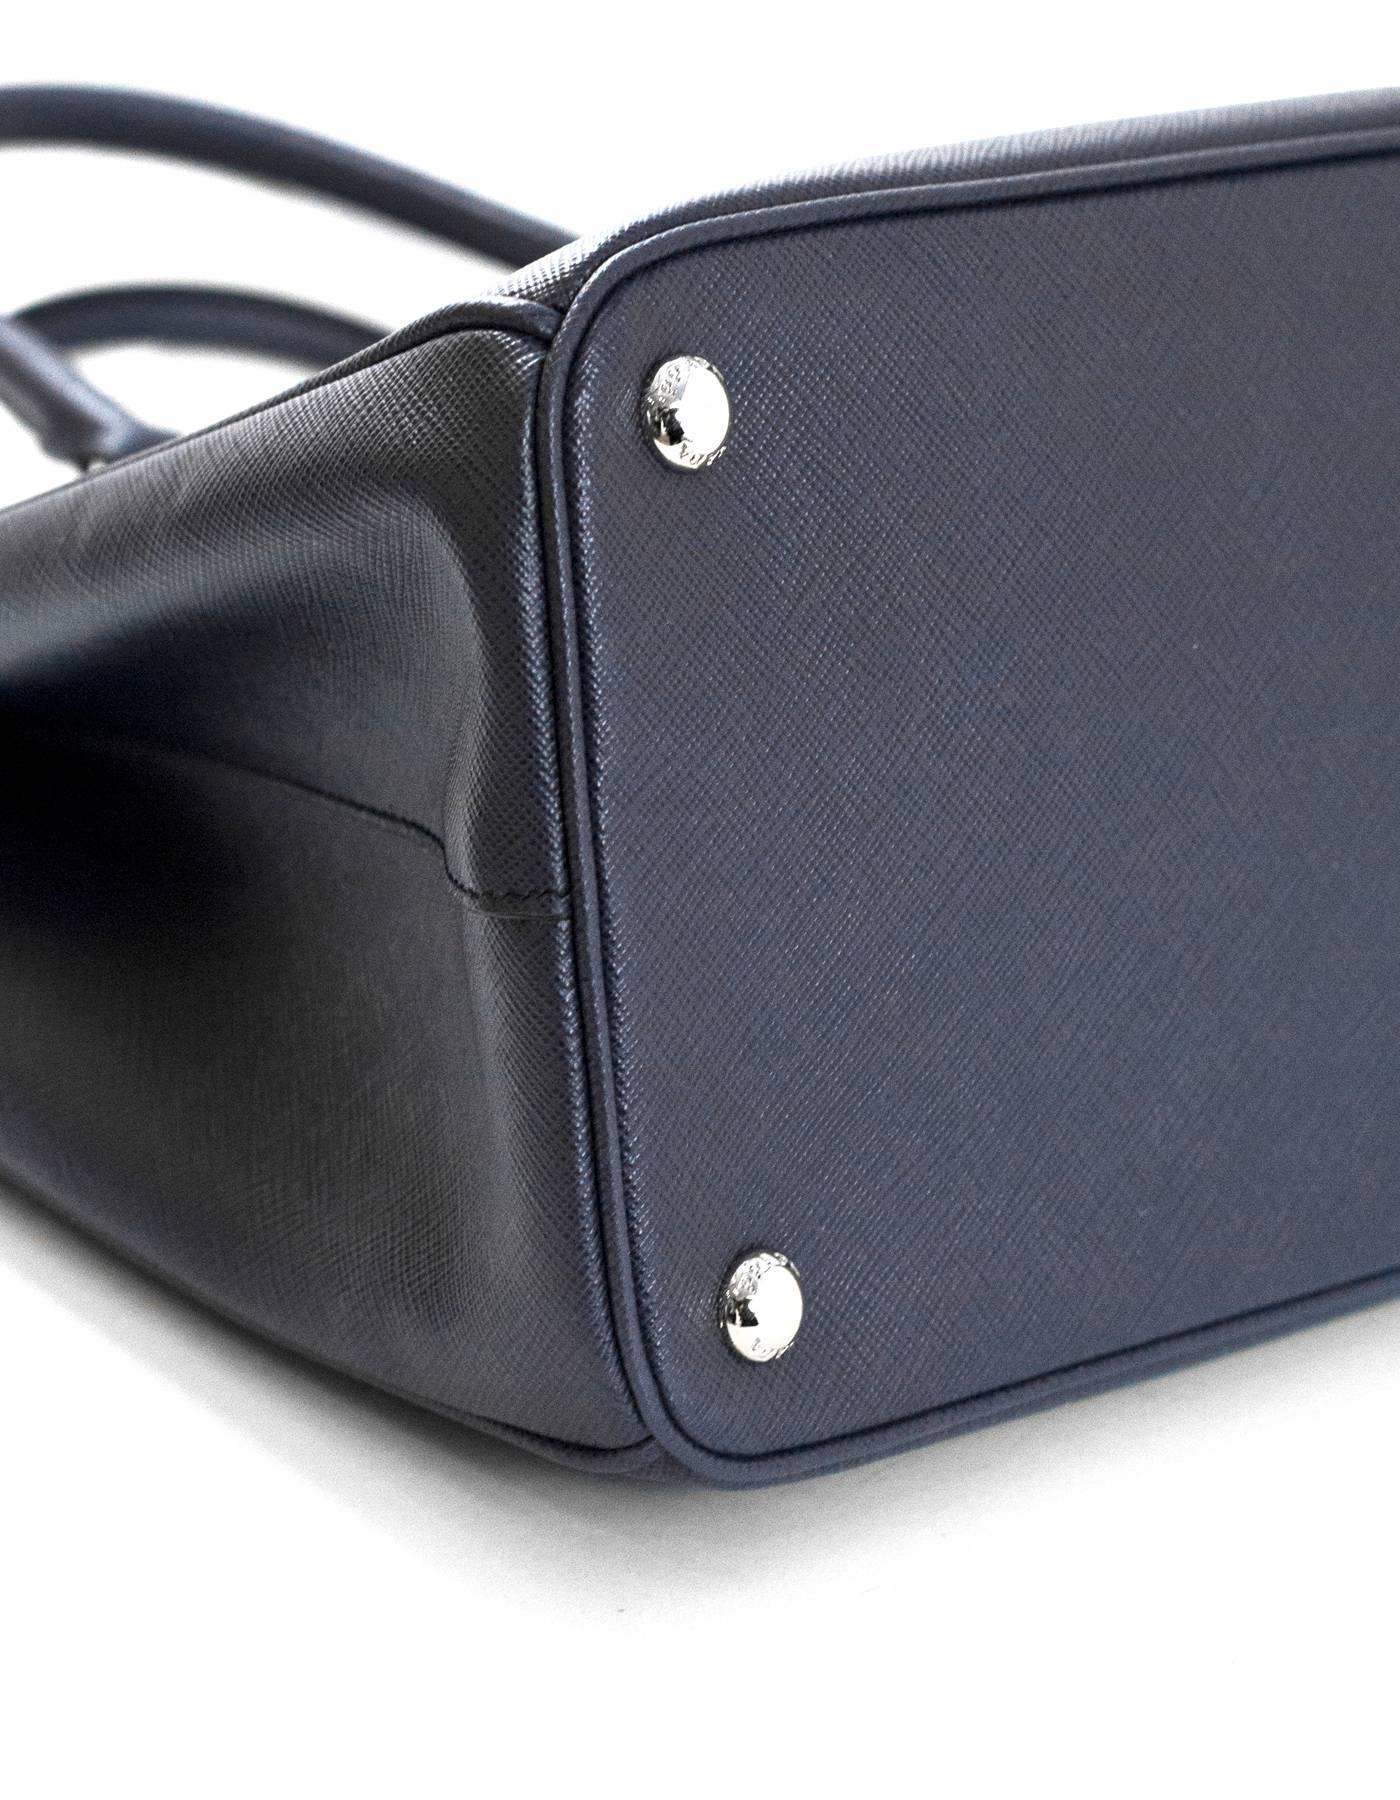 Black Prada Baltico Navy Blue Medium Double Zip Saffiano Leather Tote Bag w/ Strap